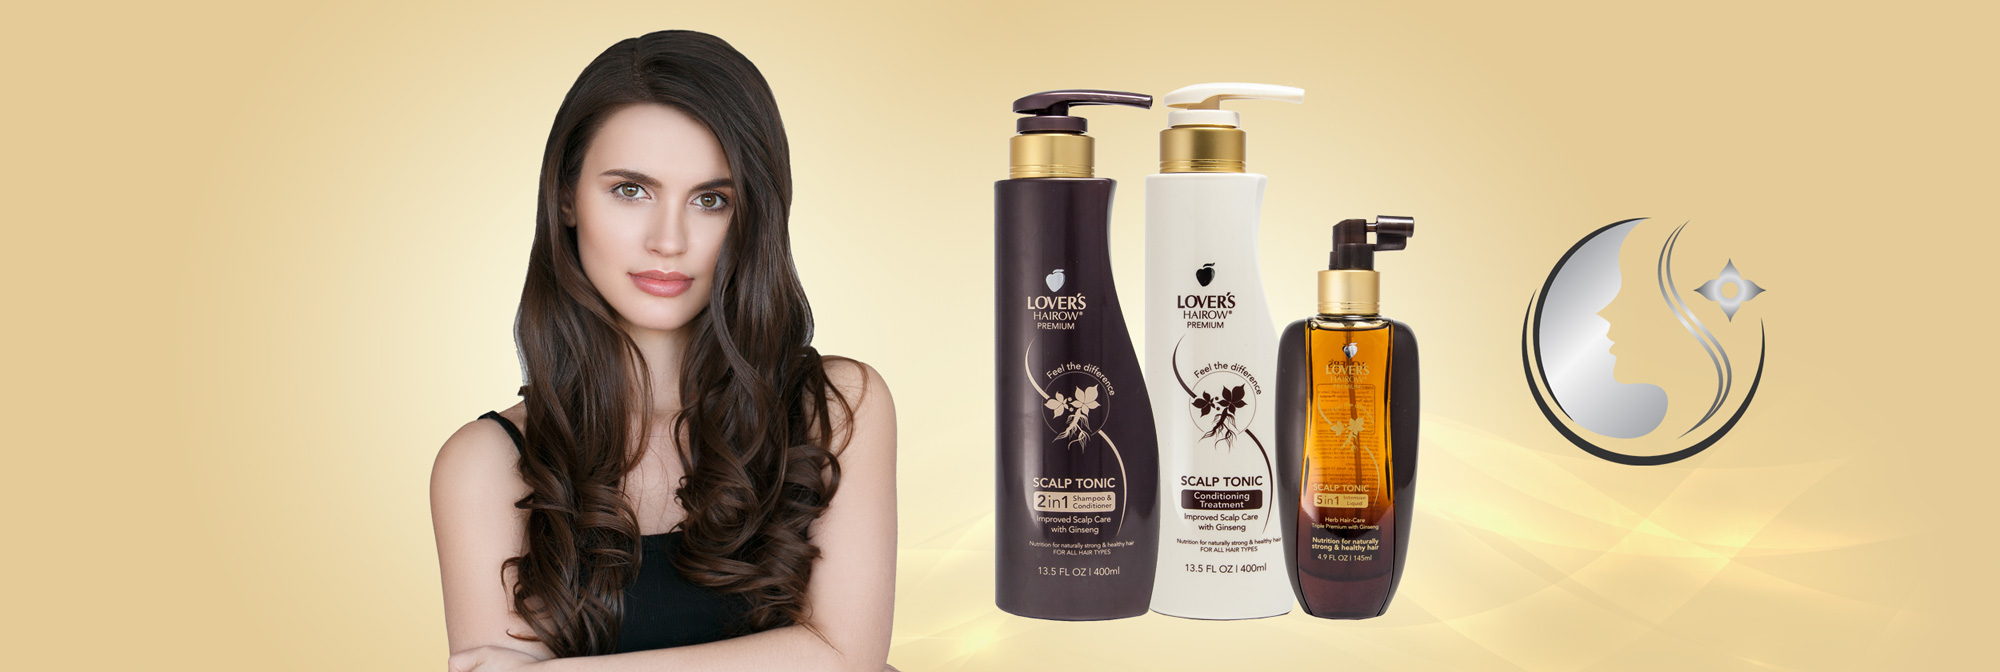 Lover's Hairow Premium shampoo & conditioner